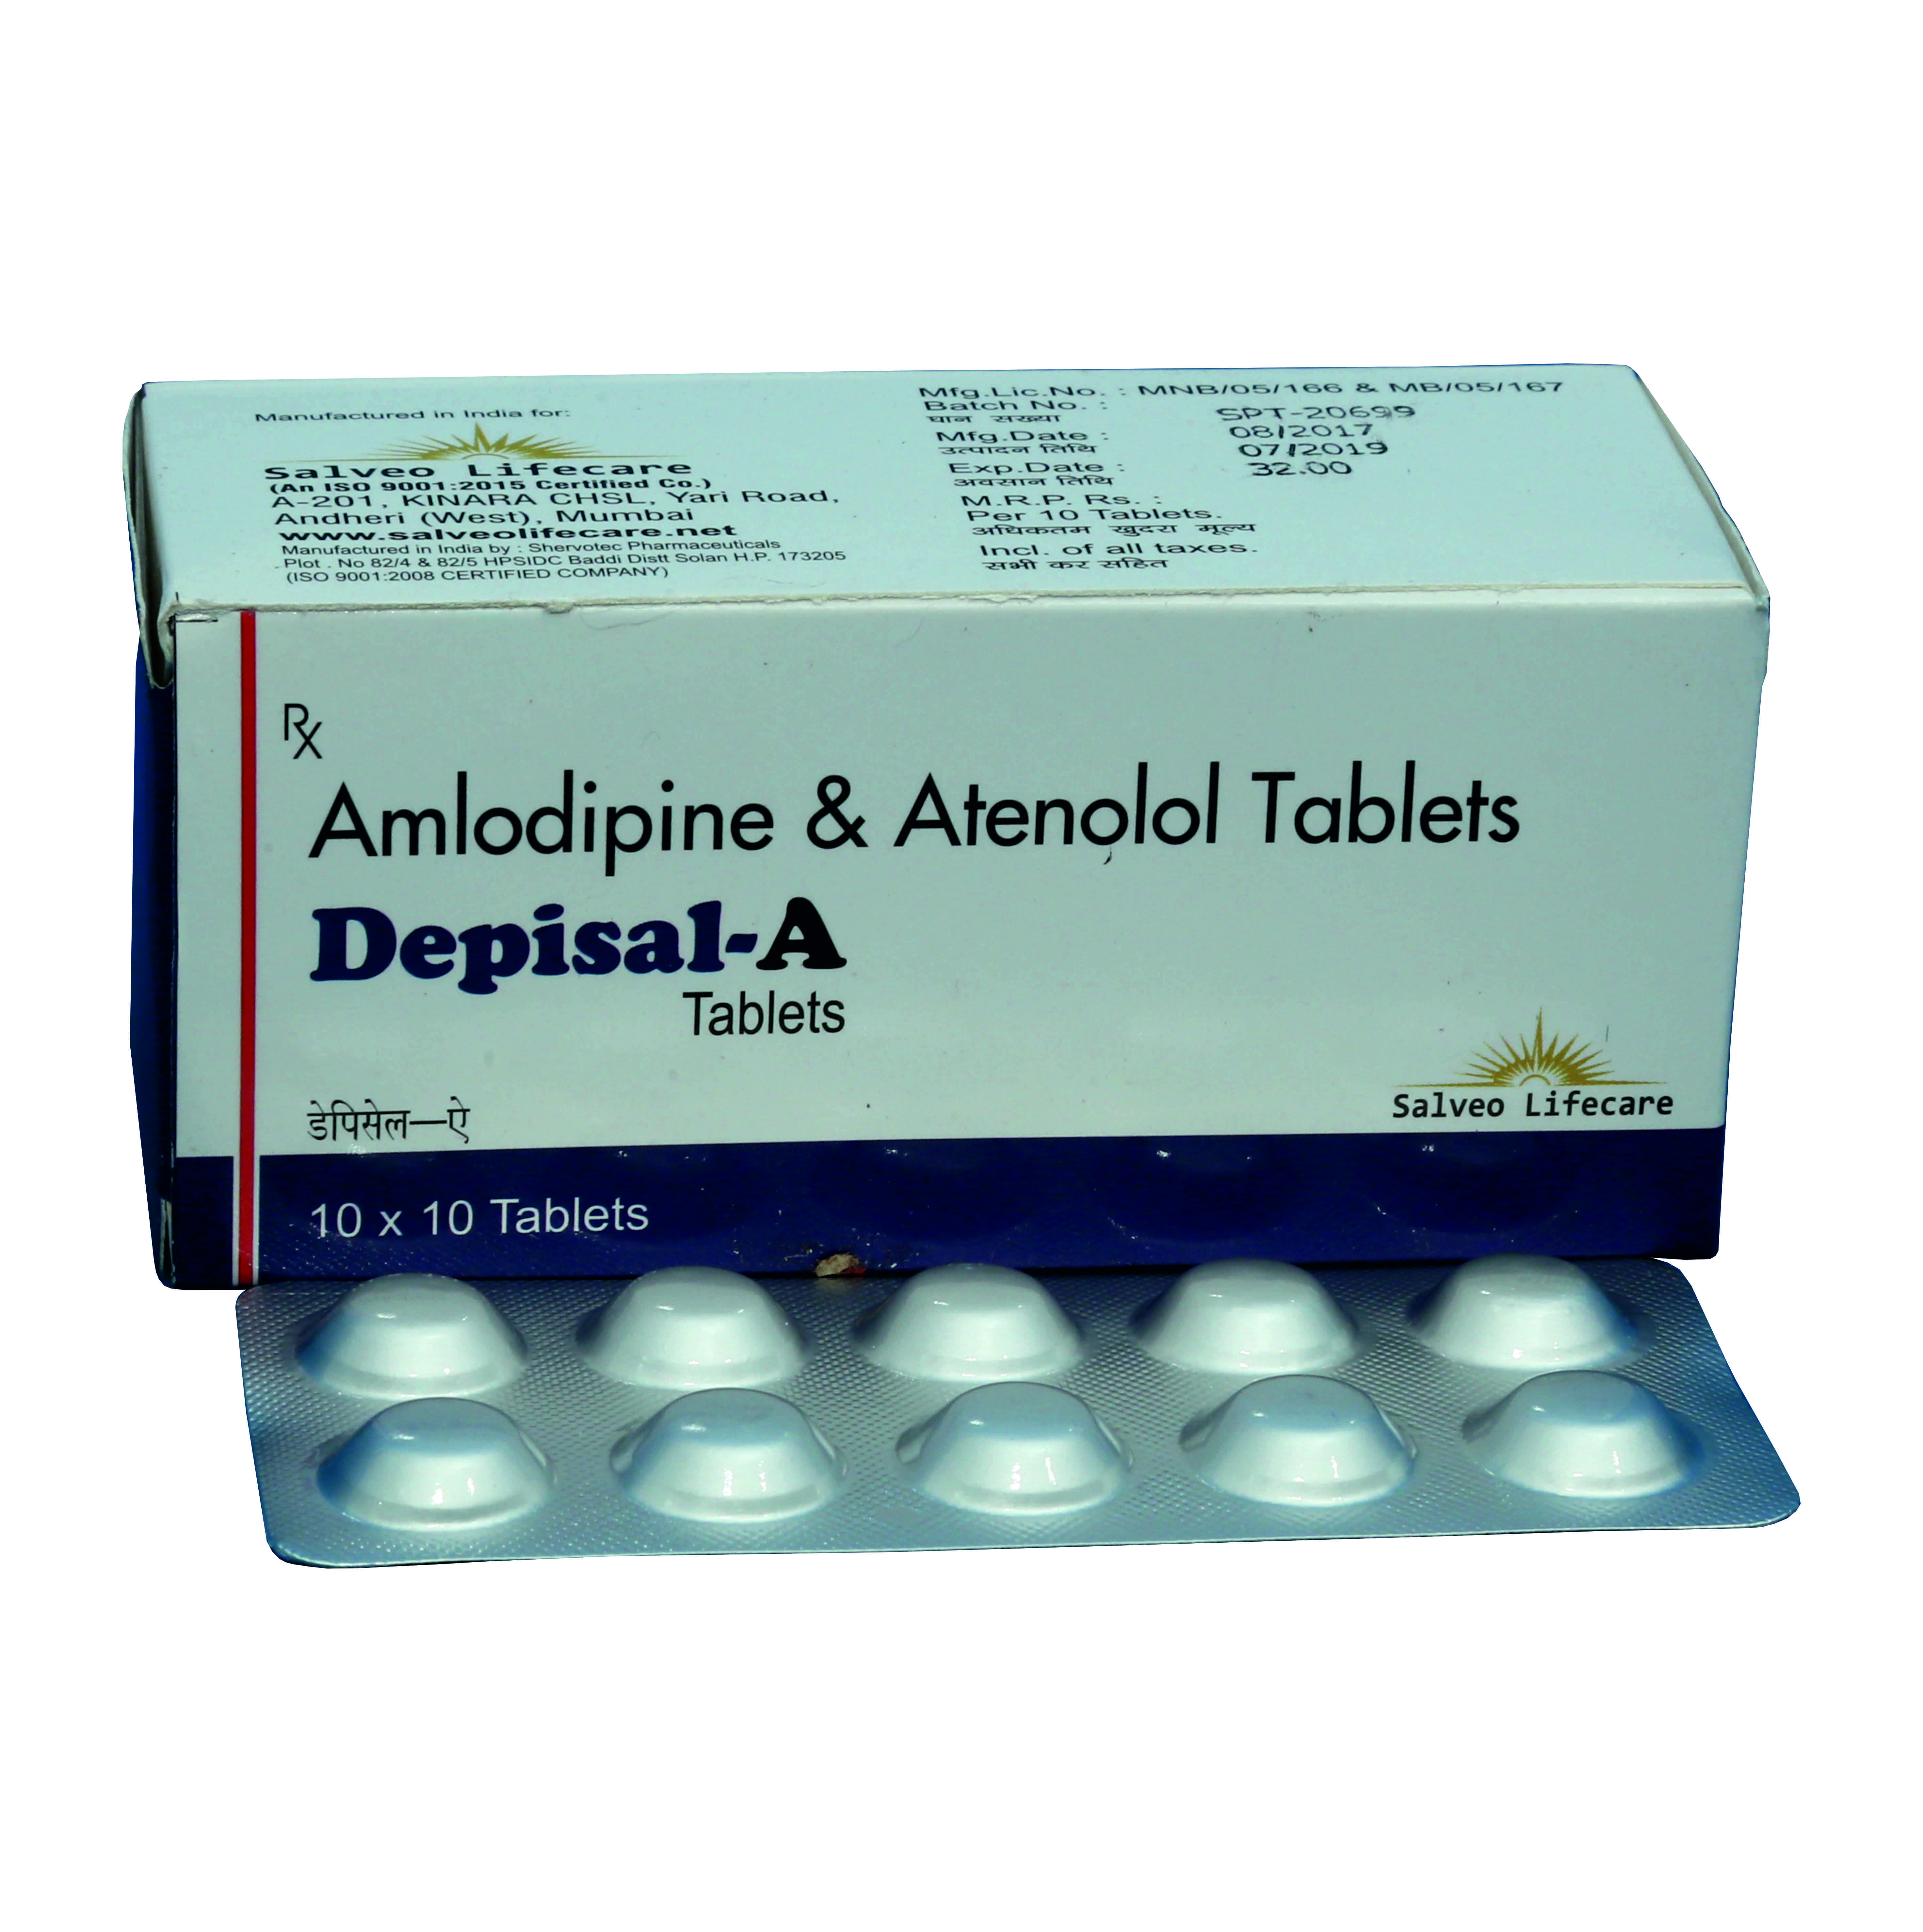 amlodipin 5 mg, atenolol 50